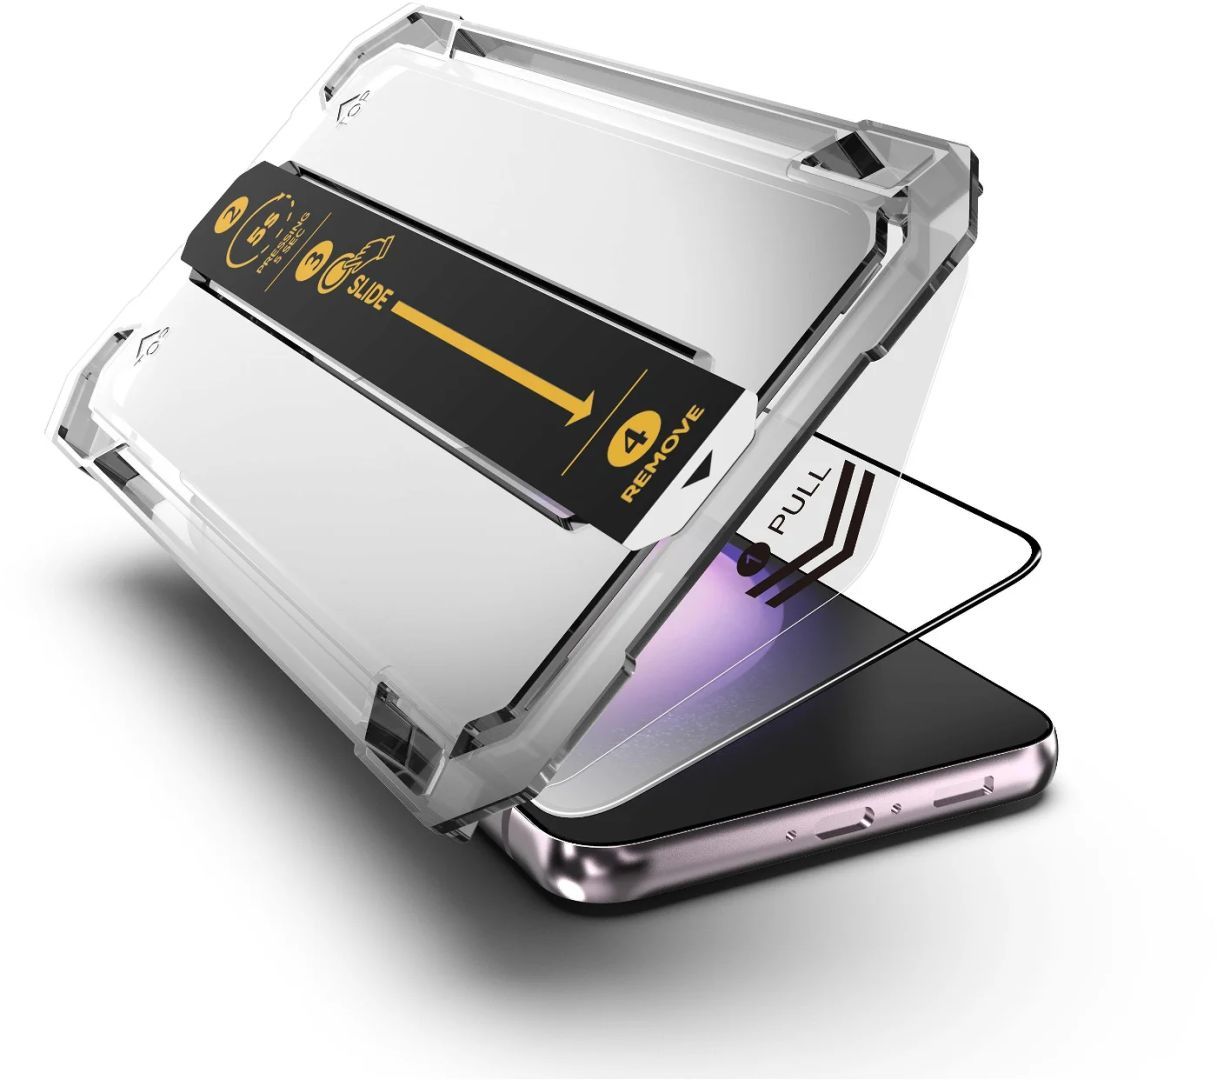 Mobile Origin Screen Guard with arrow applicator Galaxy S24